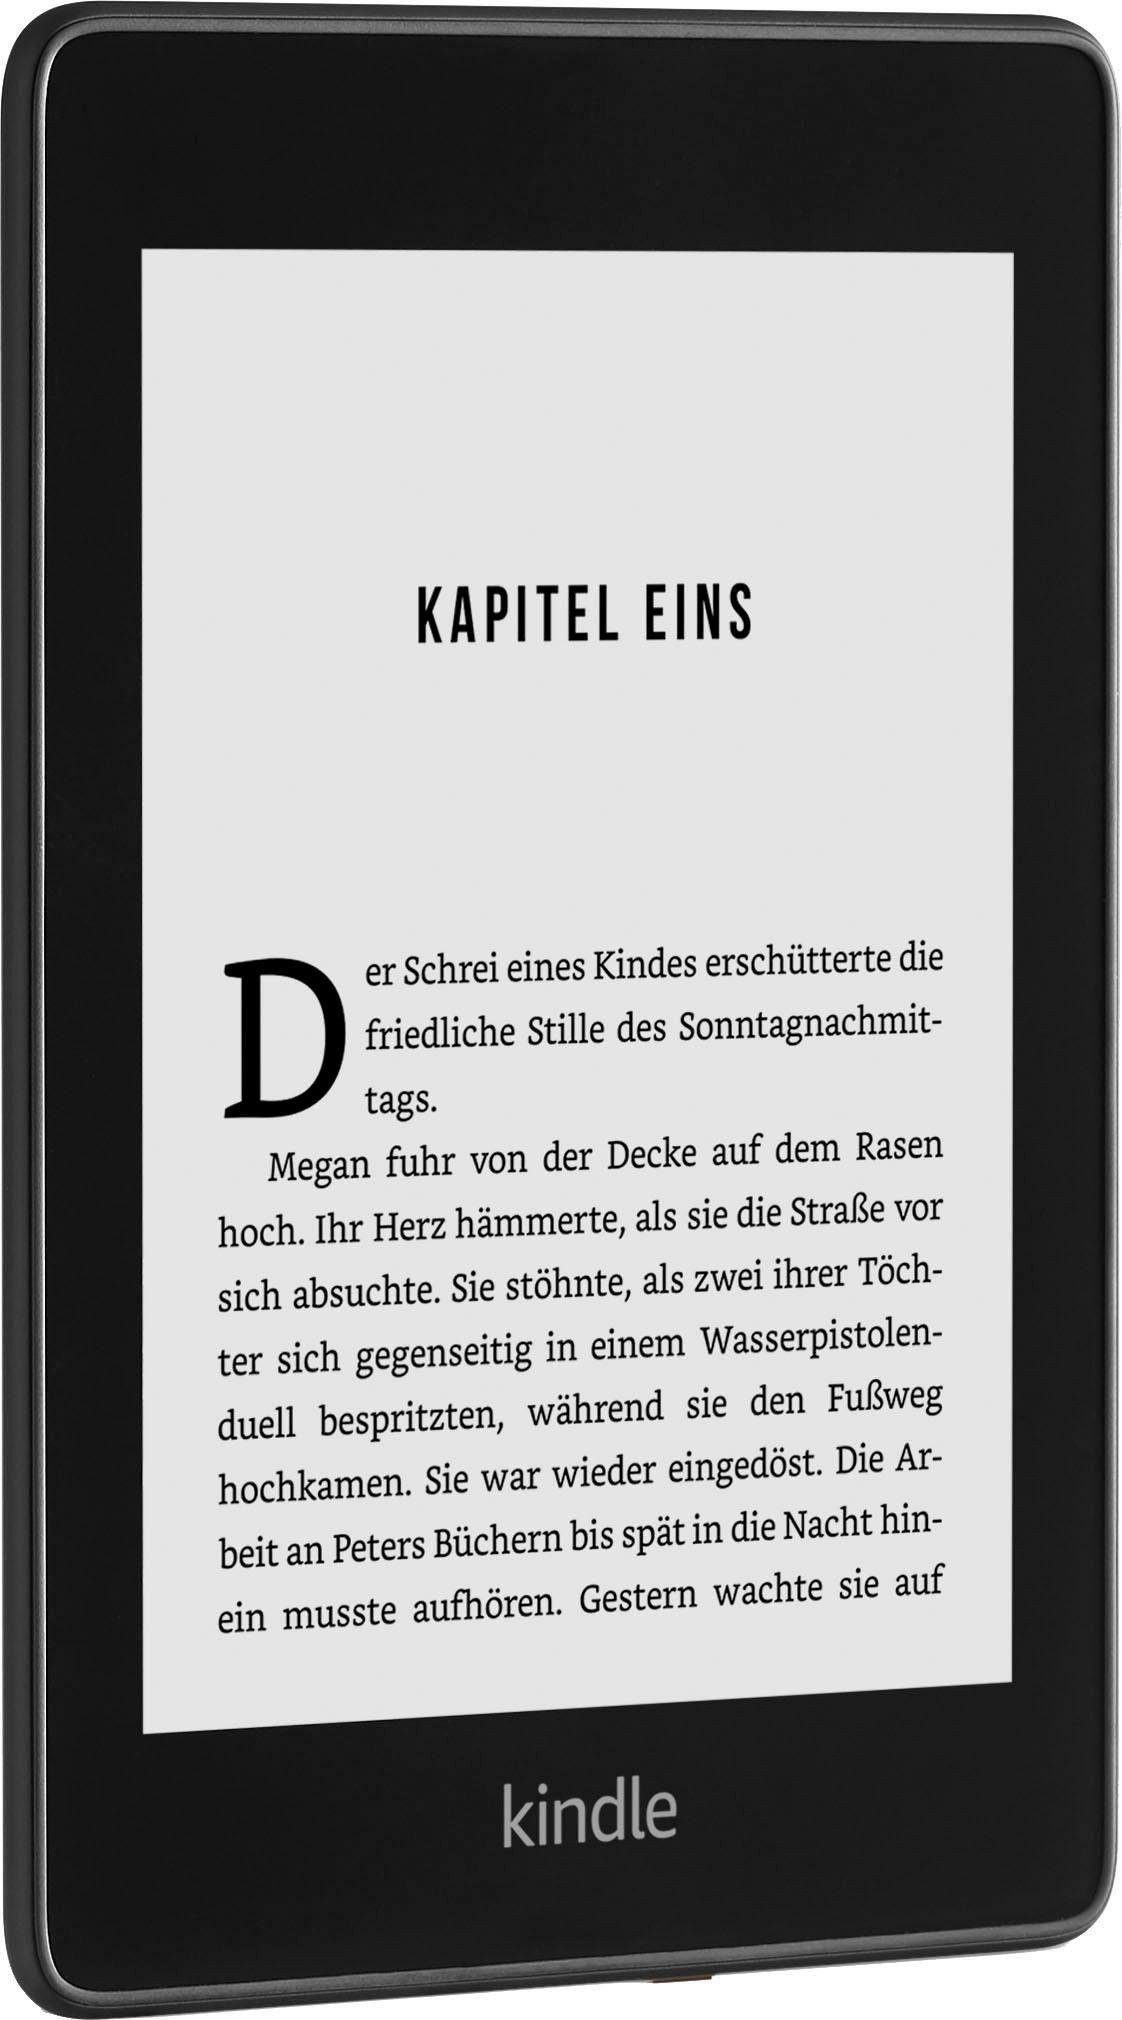 Kindle Kindle Paperwhite mit Spezialangebot E-Book (6", 32 GB)